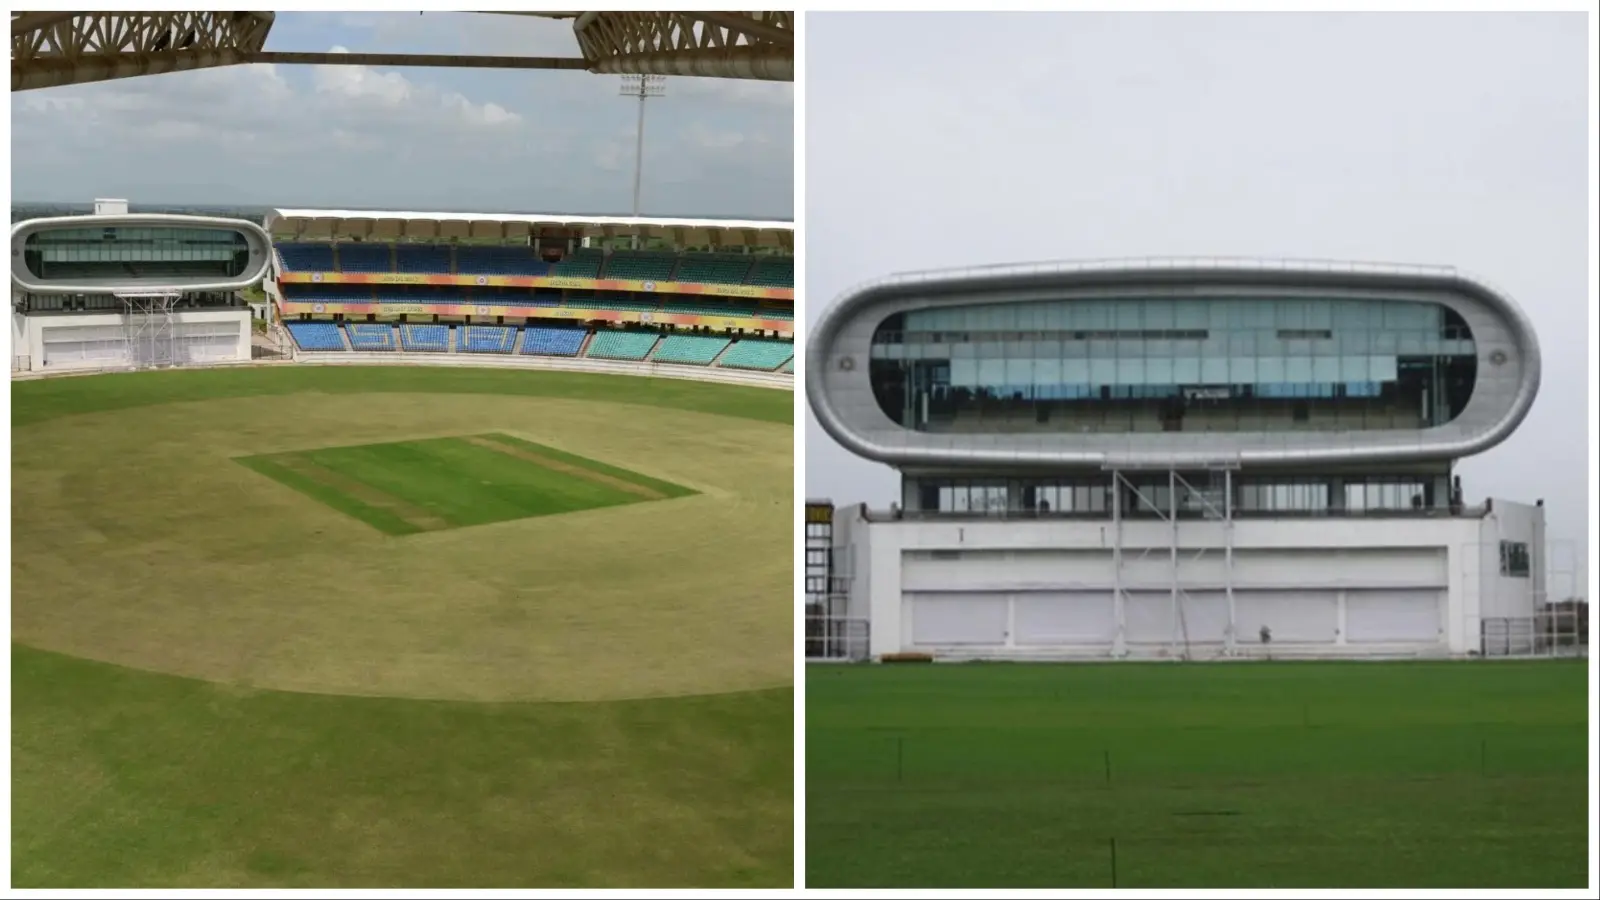 Saurashtra Cricket Association Stadium Rajkot Boundary Length and Seating Capacity